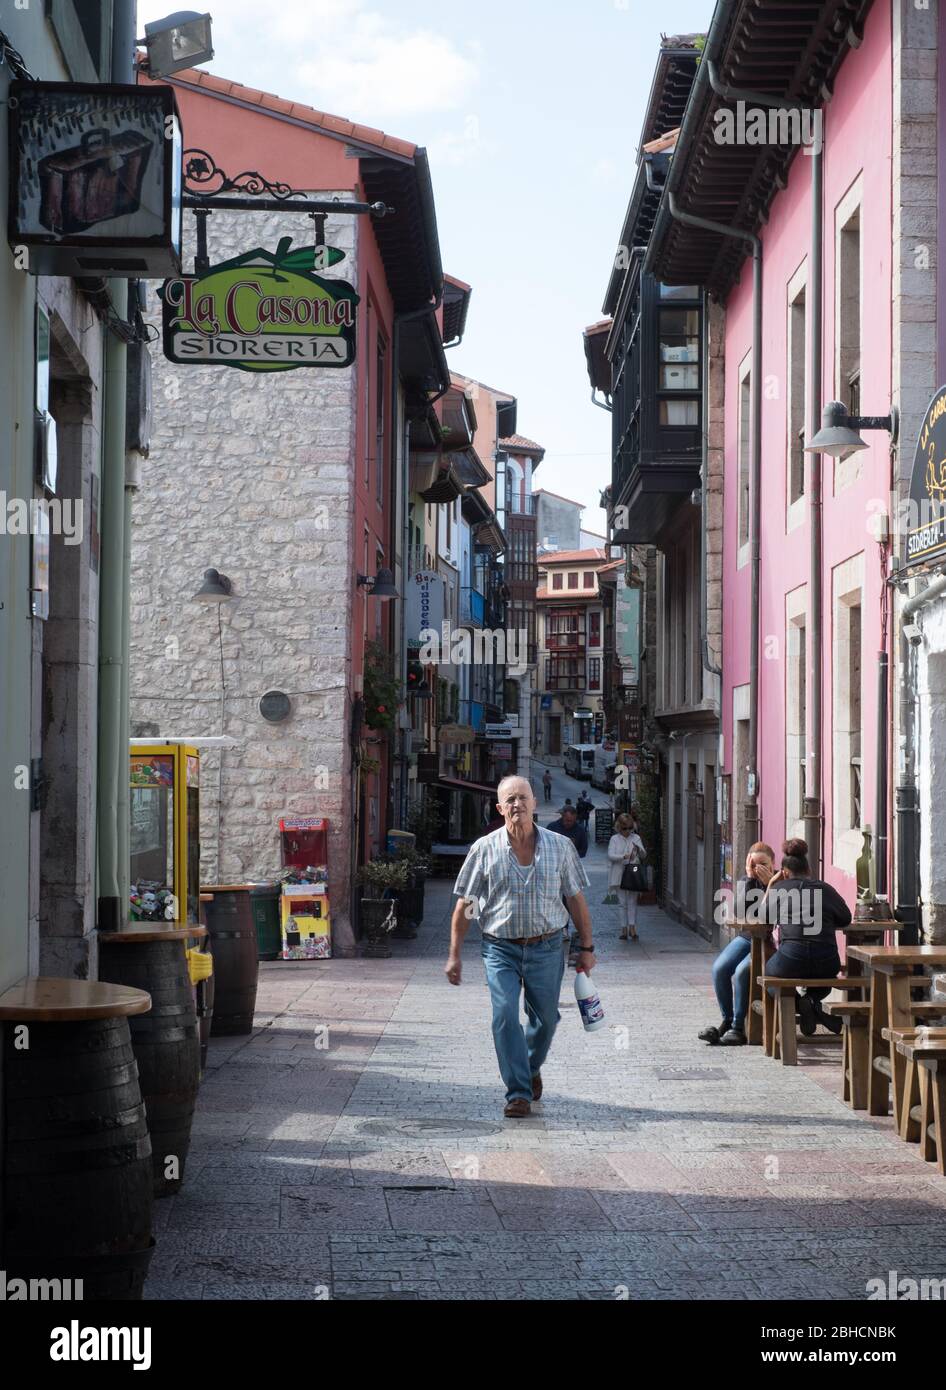 Sidrerías (cider bars) on a street in Llanes, Asturias, northern Spain Stock Photo